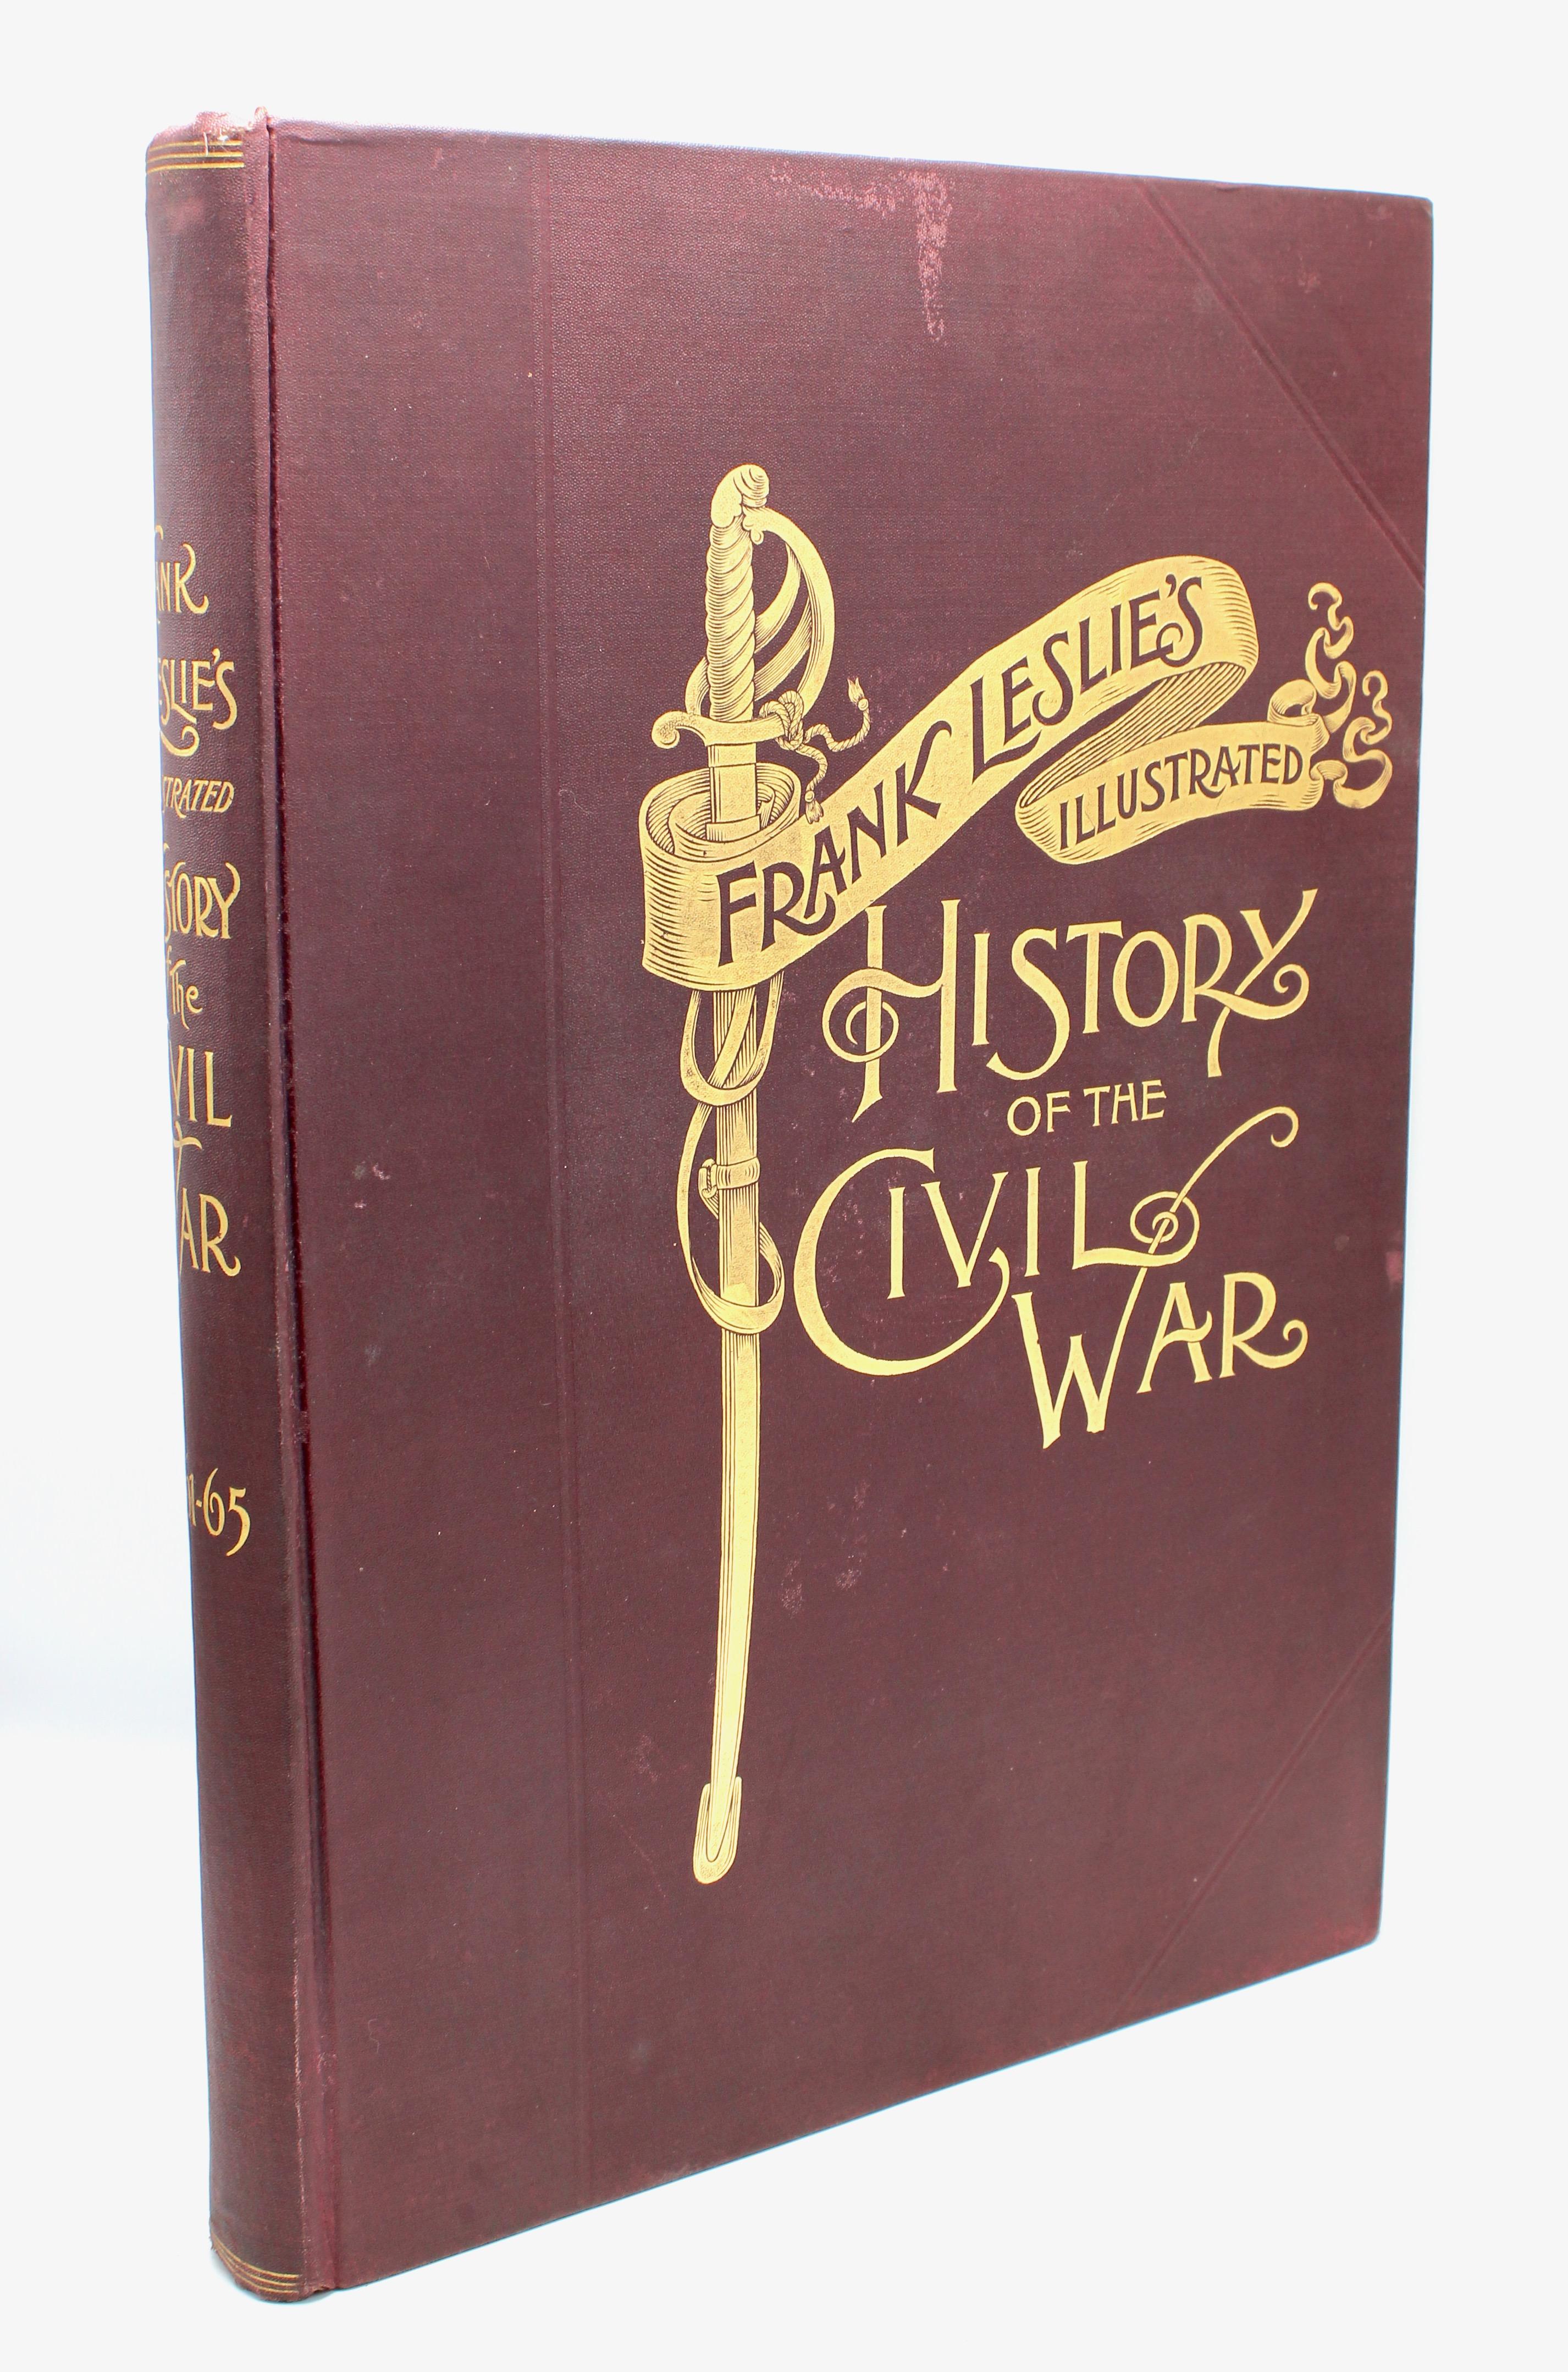 frank leslie's illustrated history of the civil war